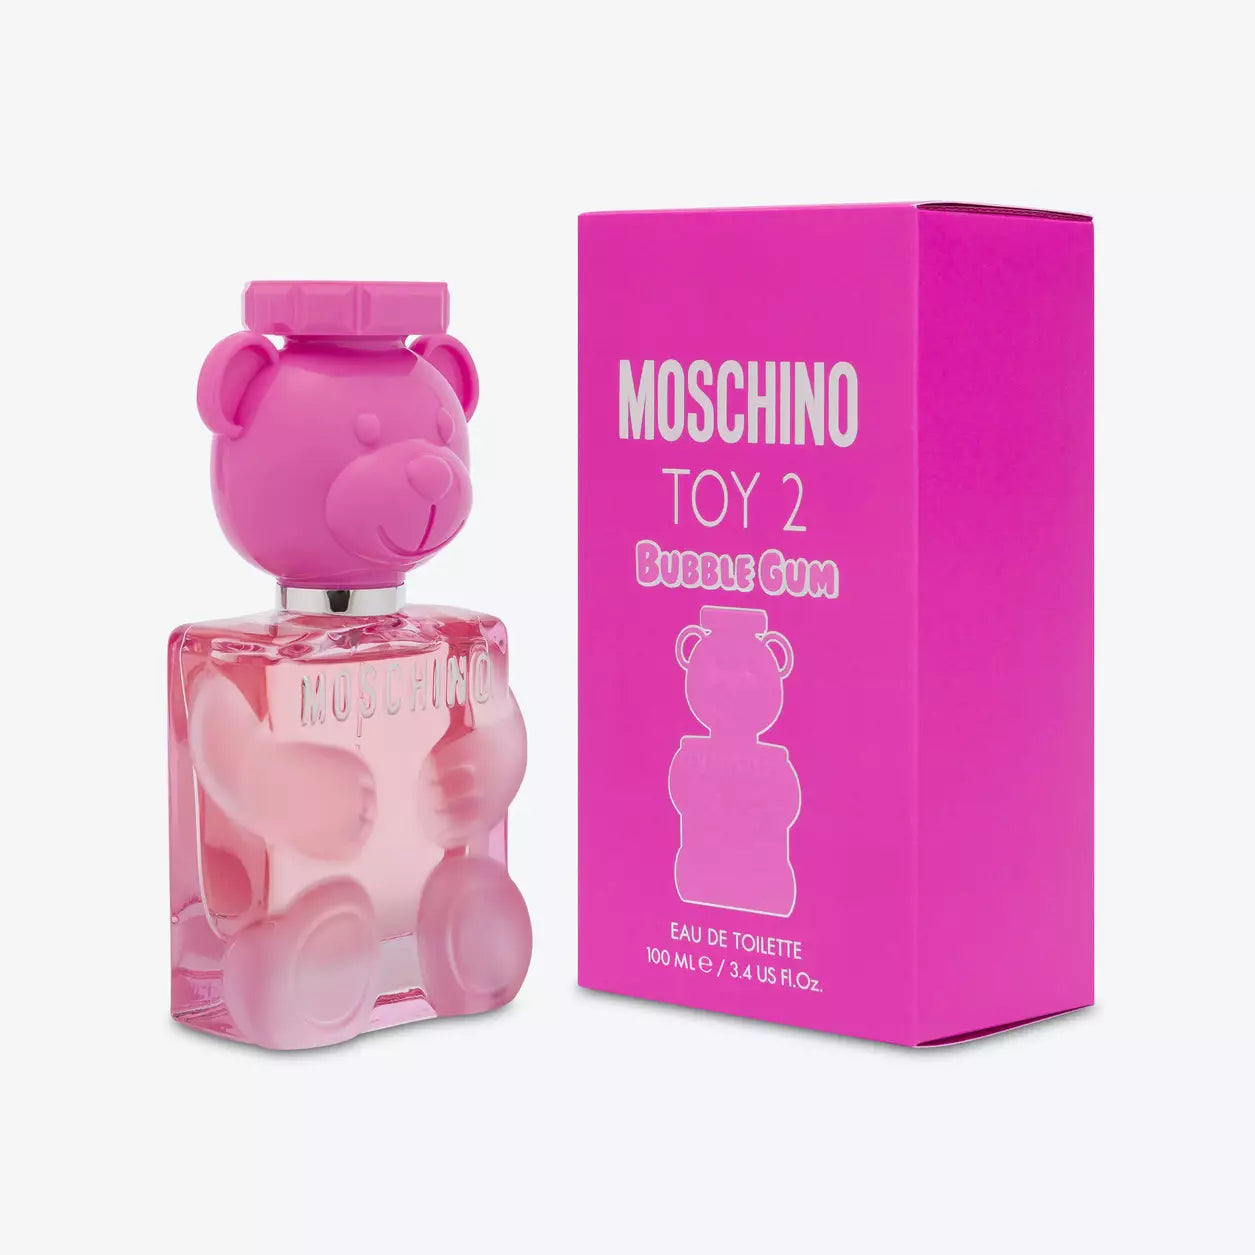 Moschino Toy 2 Bubble Gum for Women SpadezStore